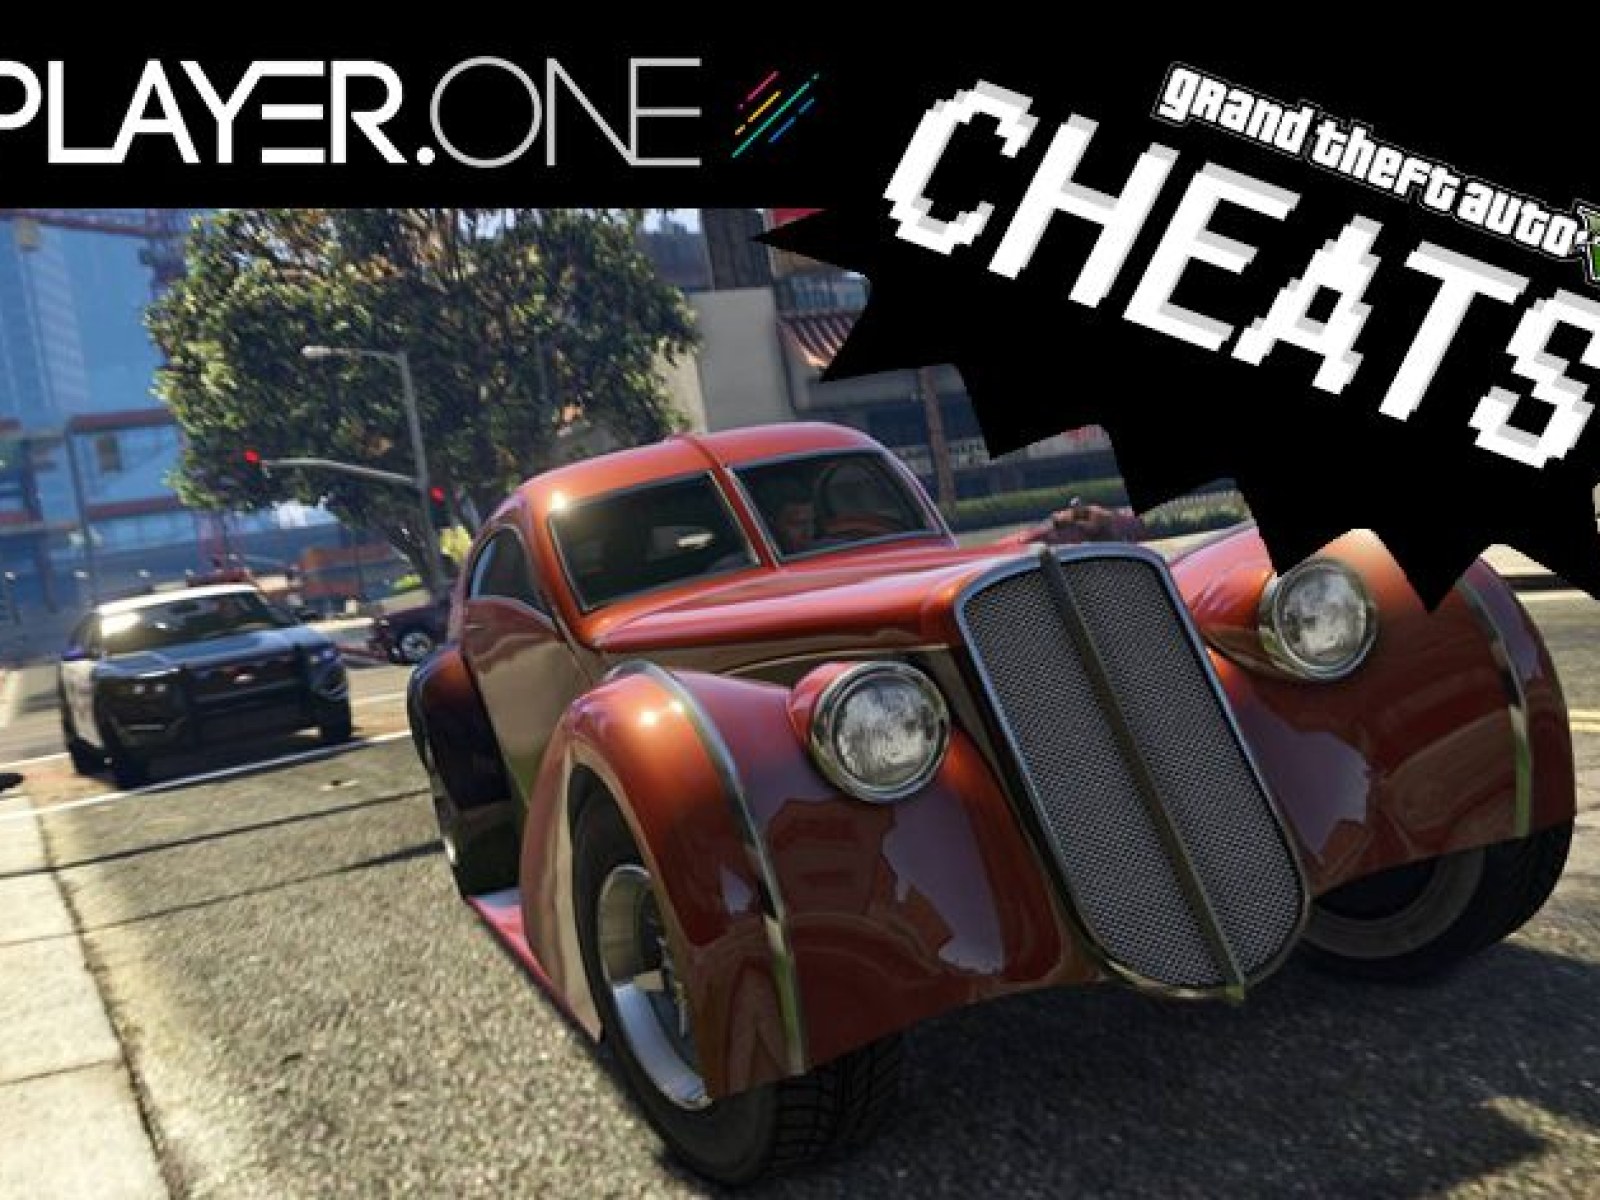 GTA V Cheats Xbox Infinite Health, Weapons, Money Cheat And 28 Cheat Codes